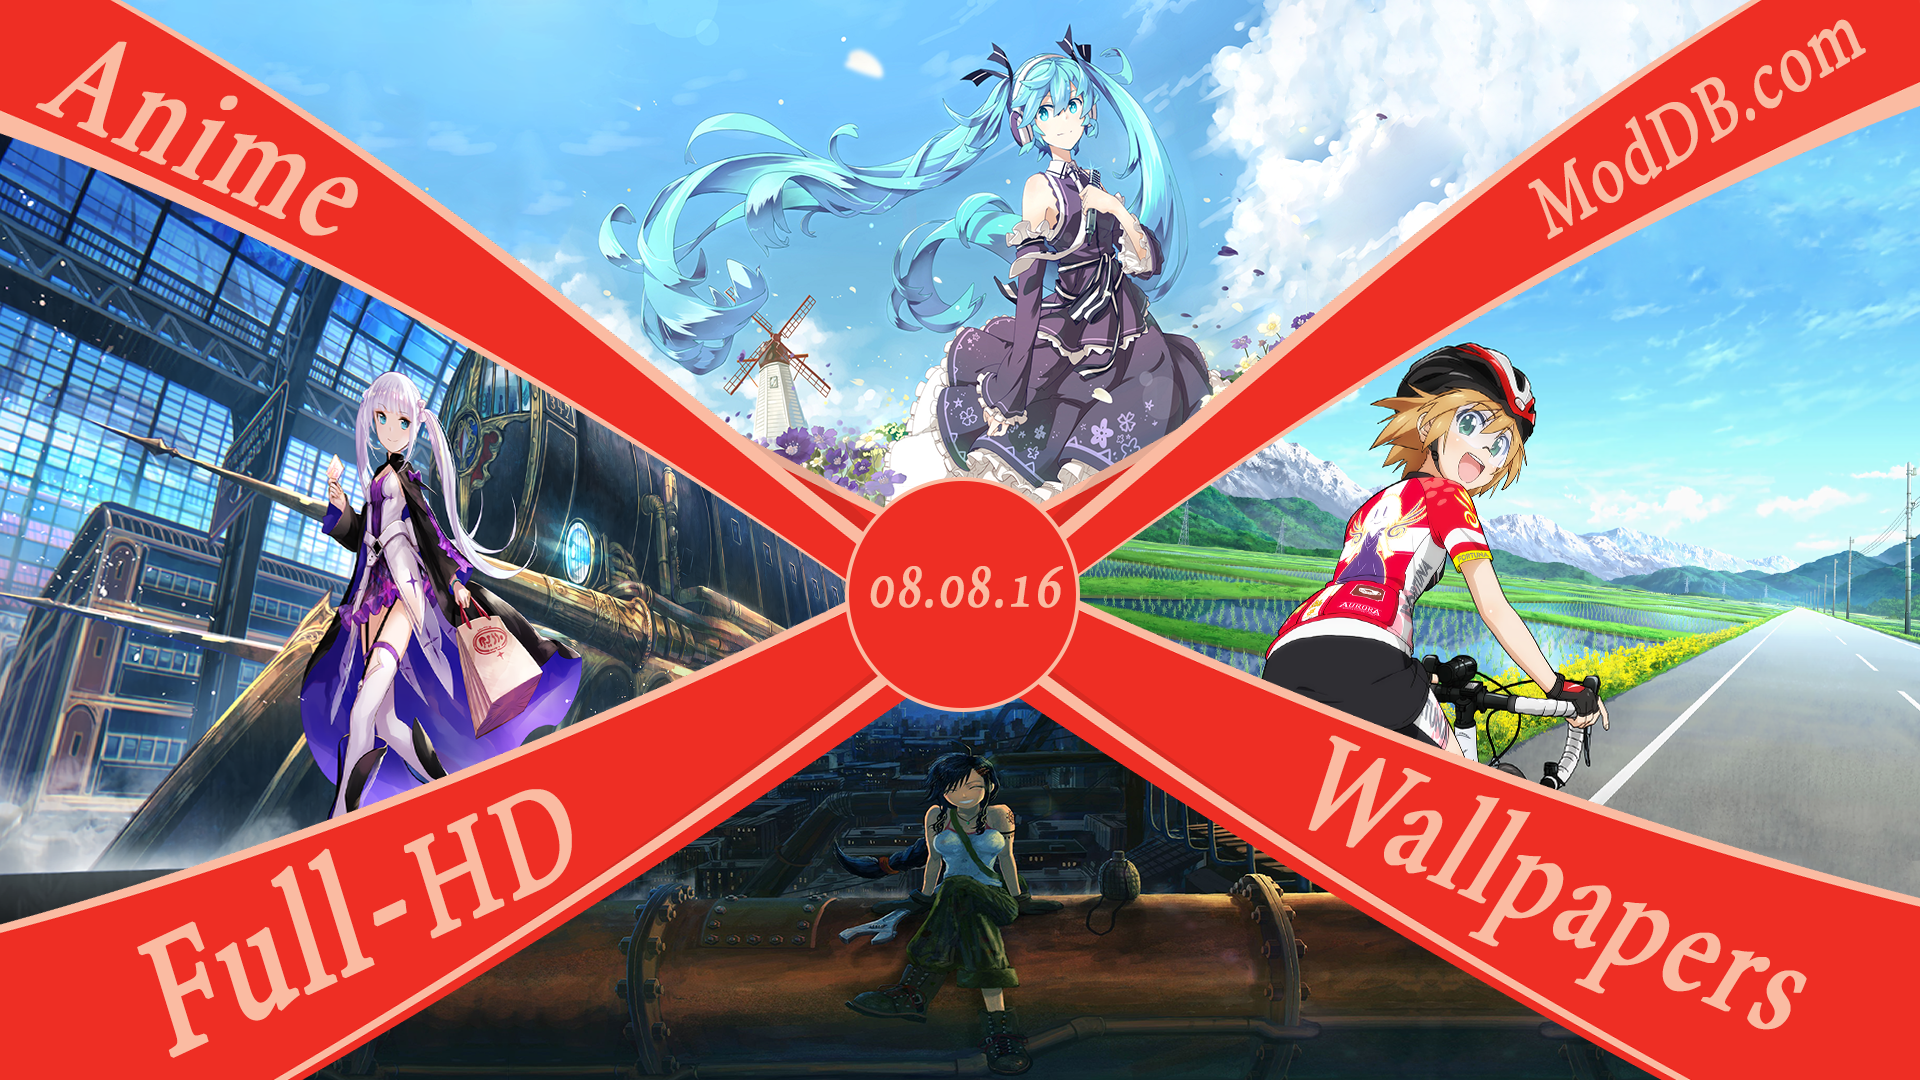 Old Anime Wallpaper's (Full-HD) - 05.05.15 file - Animes' Heaven - Mod DB